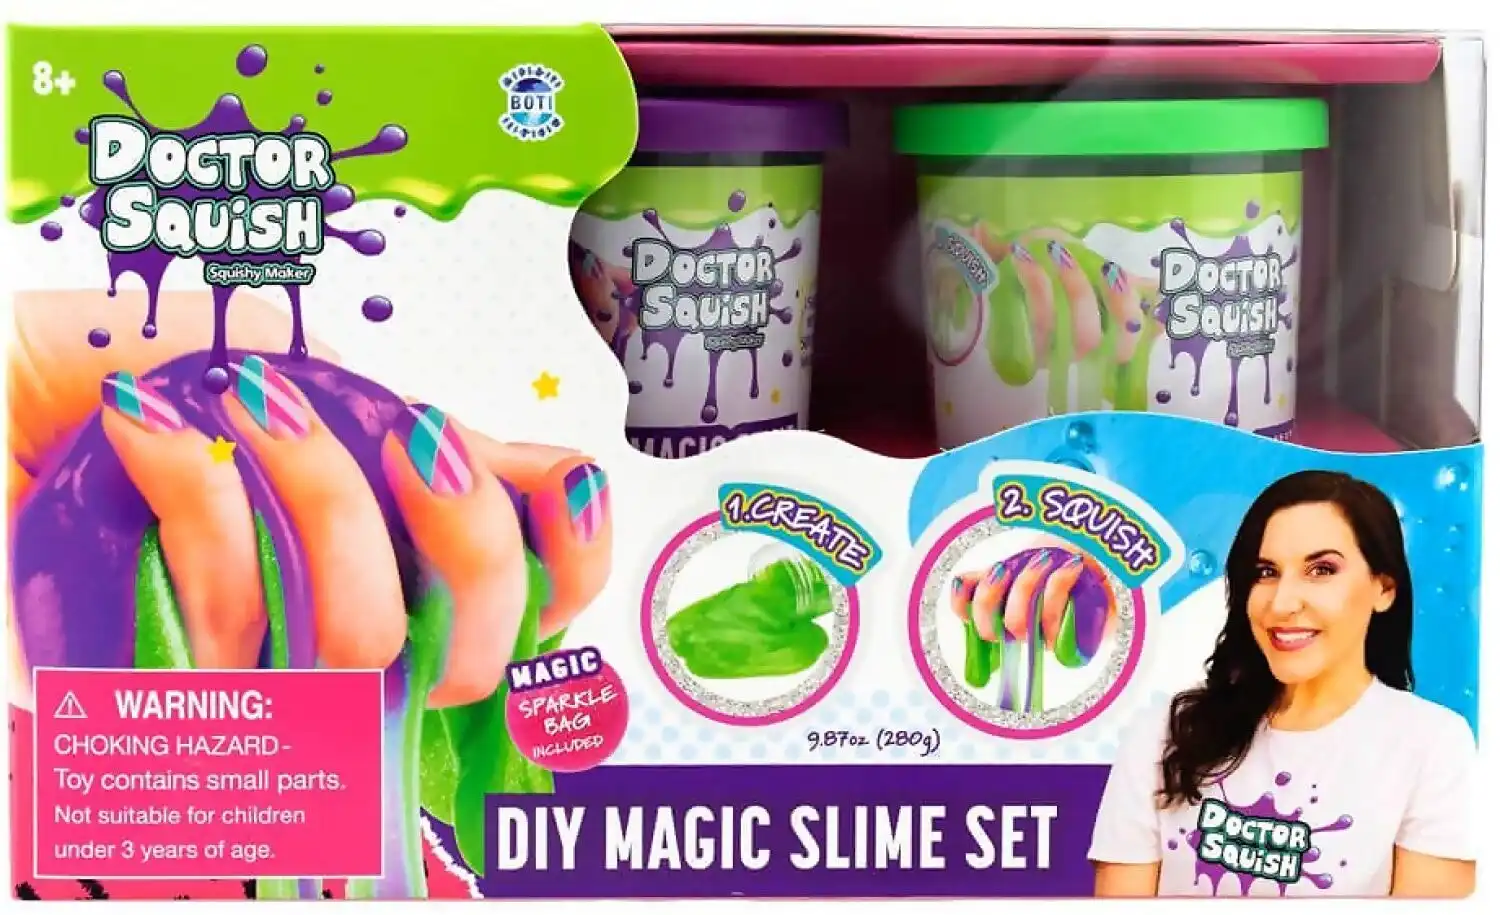 Doctor Squish Diy Magic Slime Set